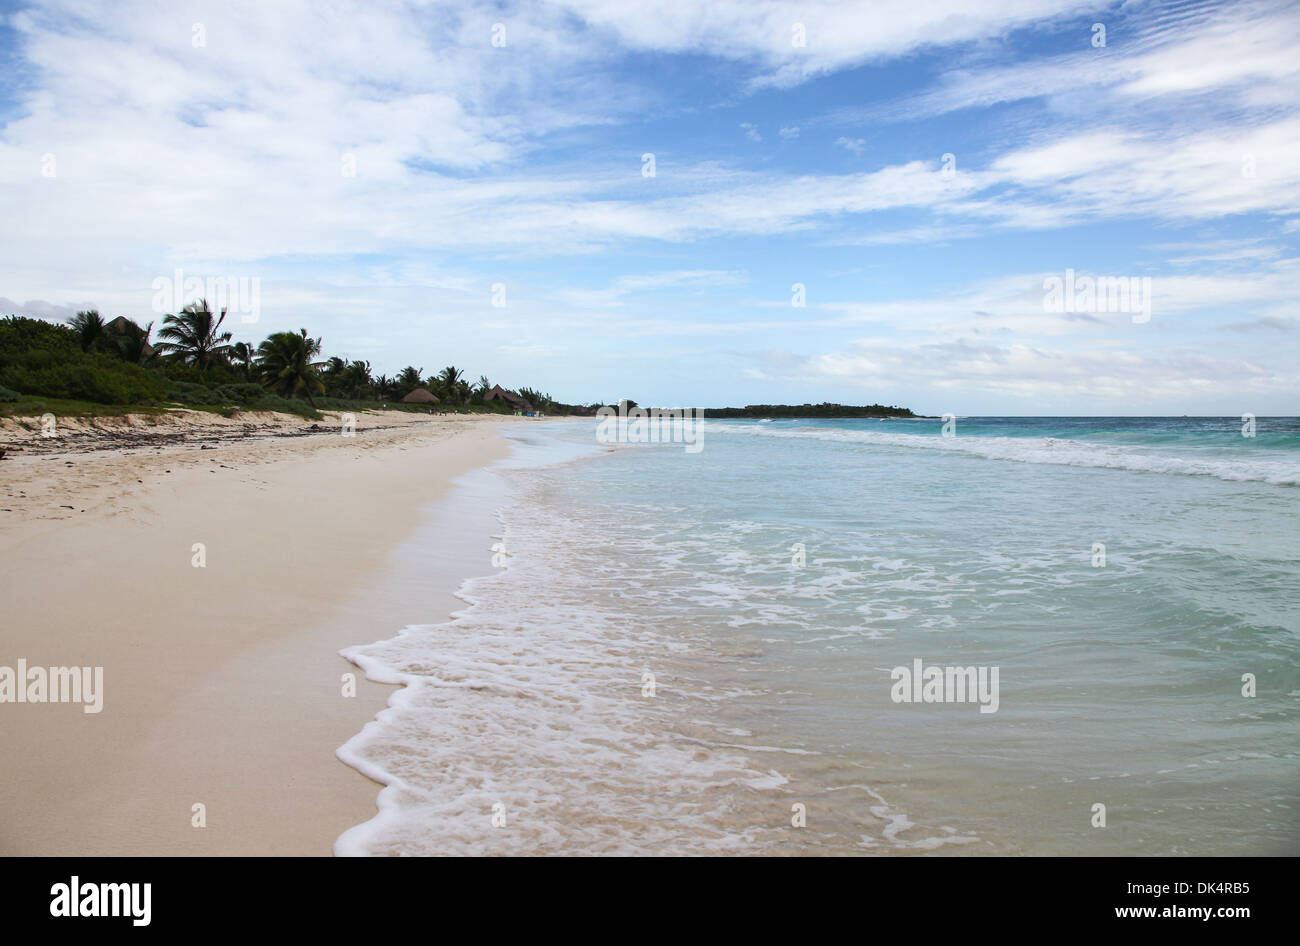 Einem einsamen Strand in Riviera Maya Cancun Quintana Roo Yucatan Halbinsel Mexiko Nordamerika Stockfoto